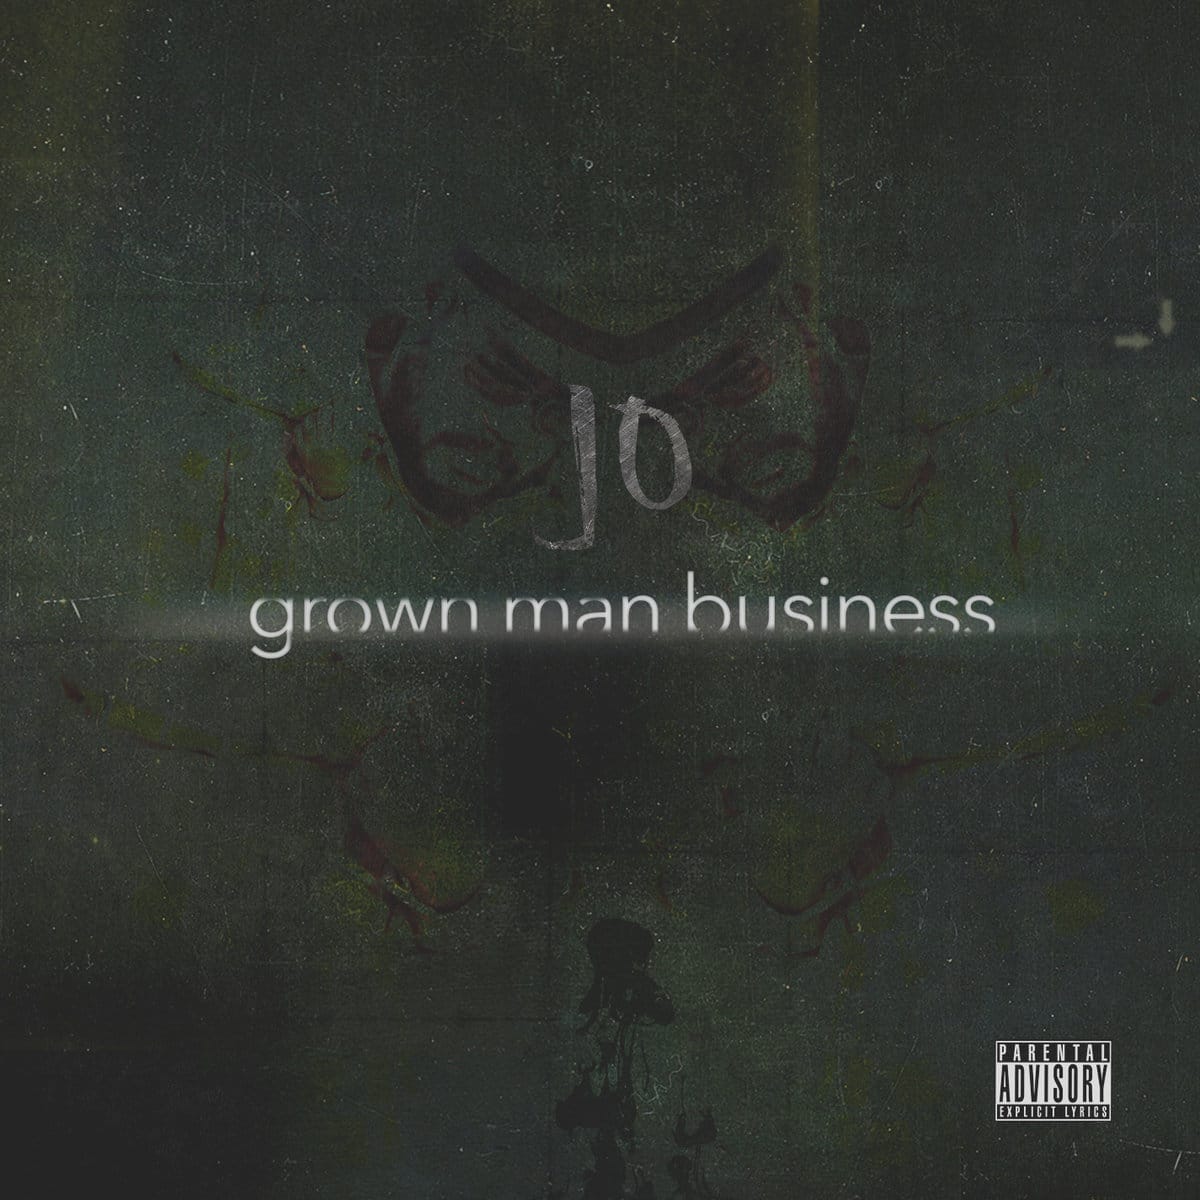 J.O. - "Grown Man Business" (Release)